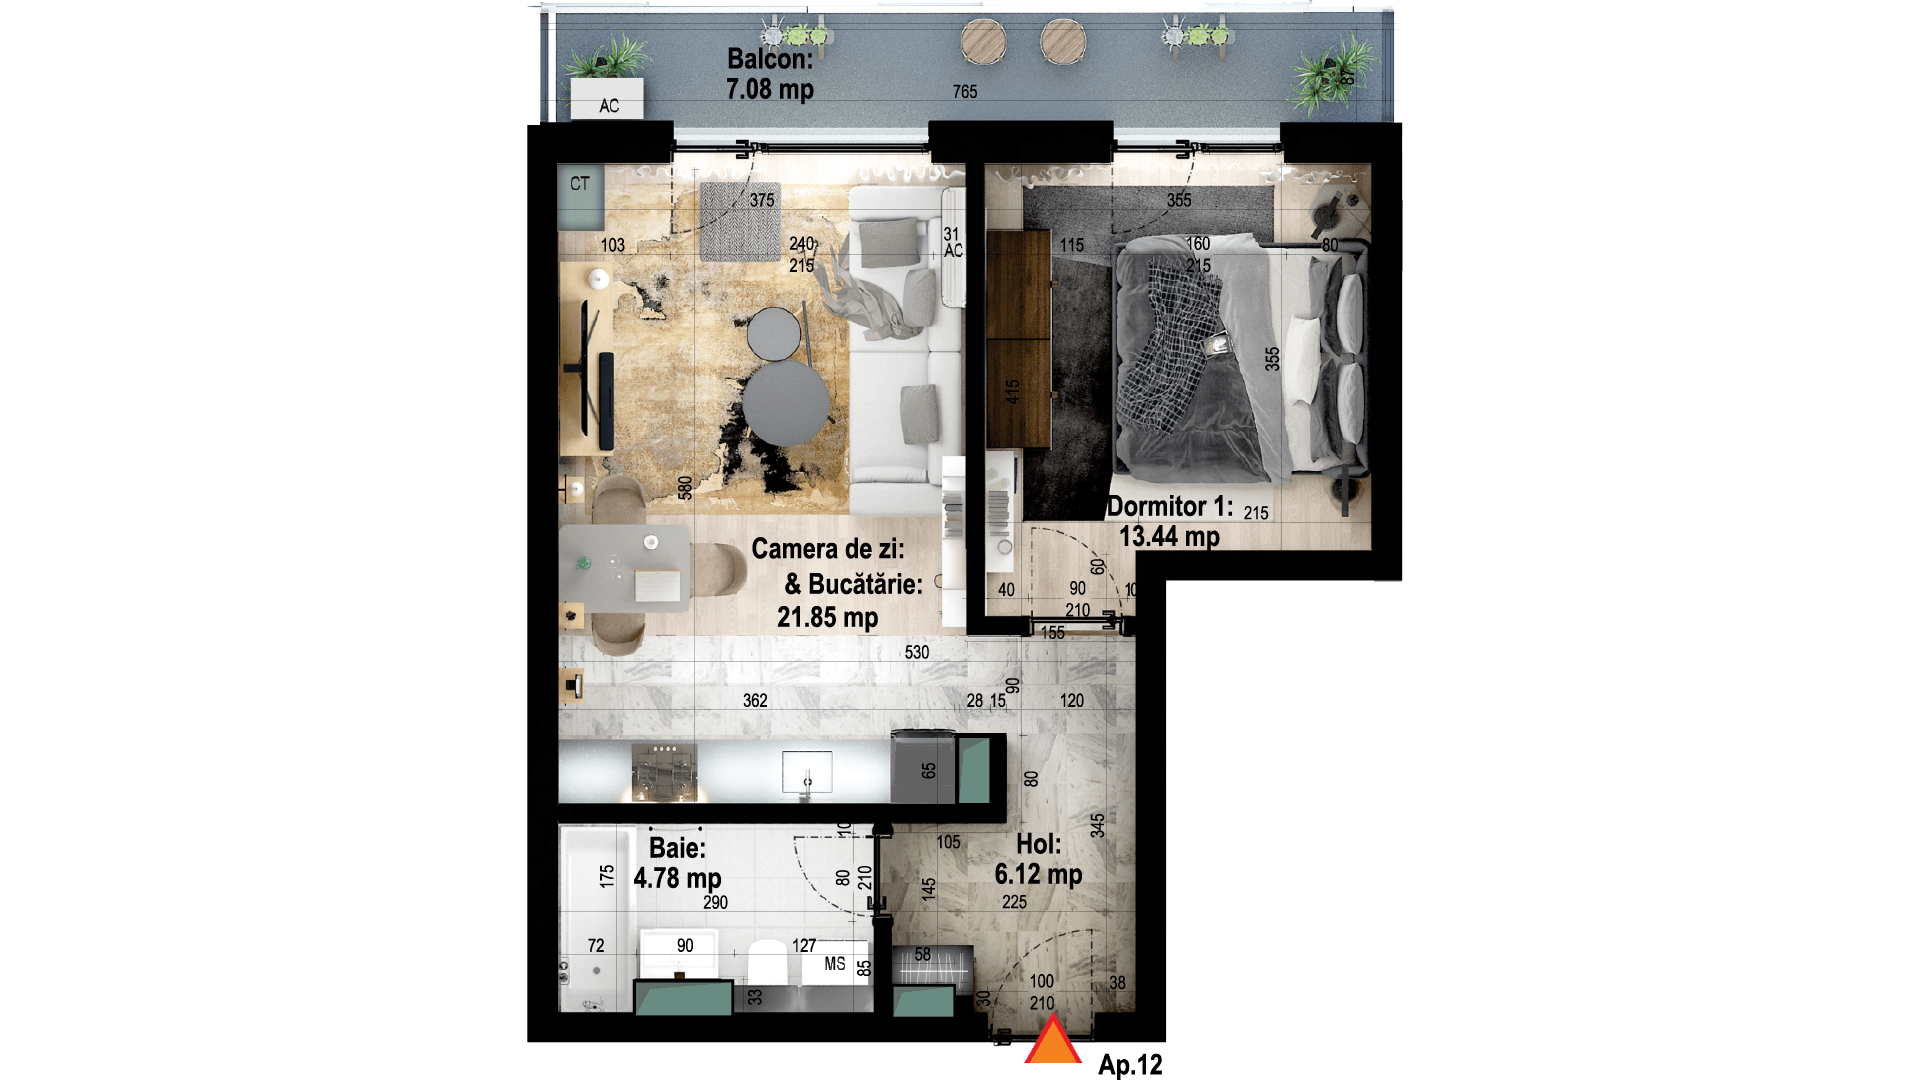 Apartment Plan 12